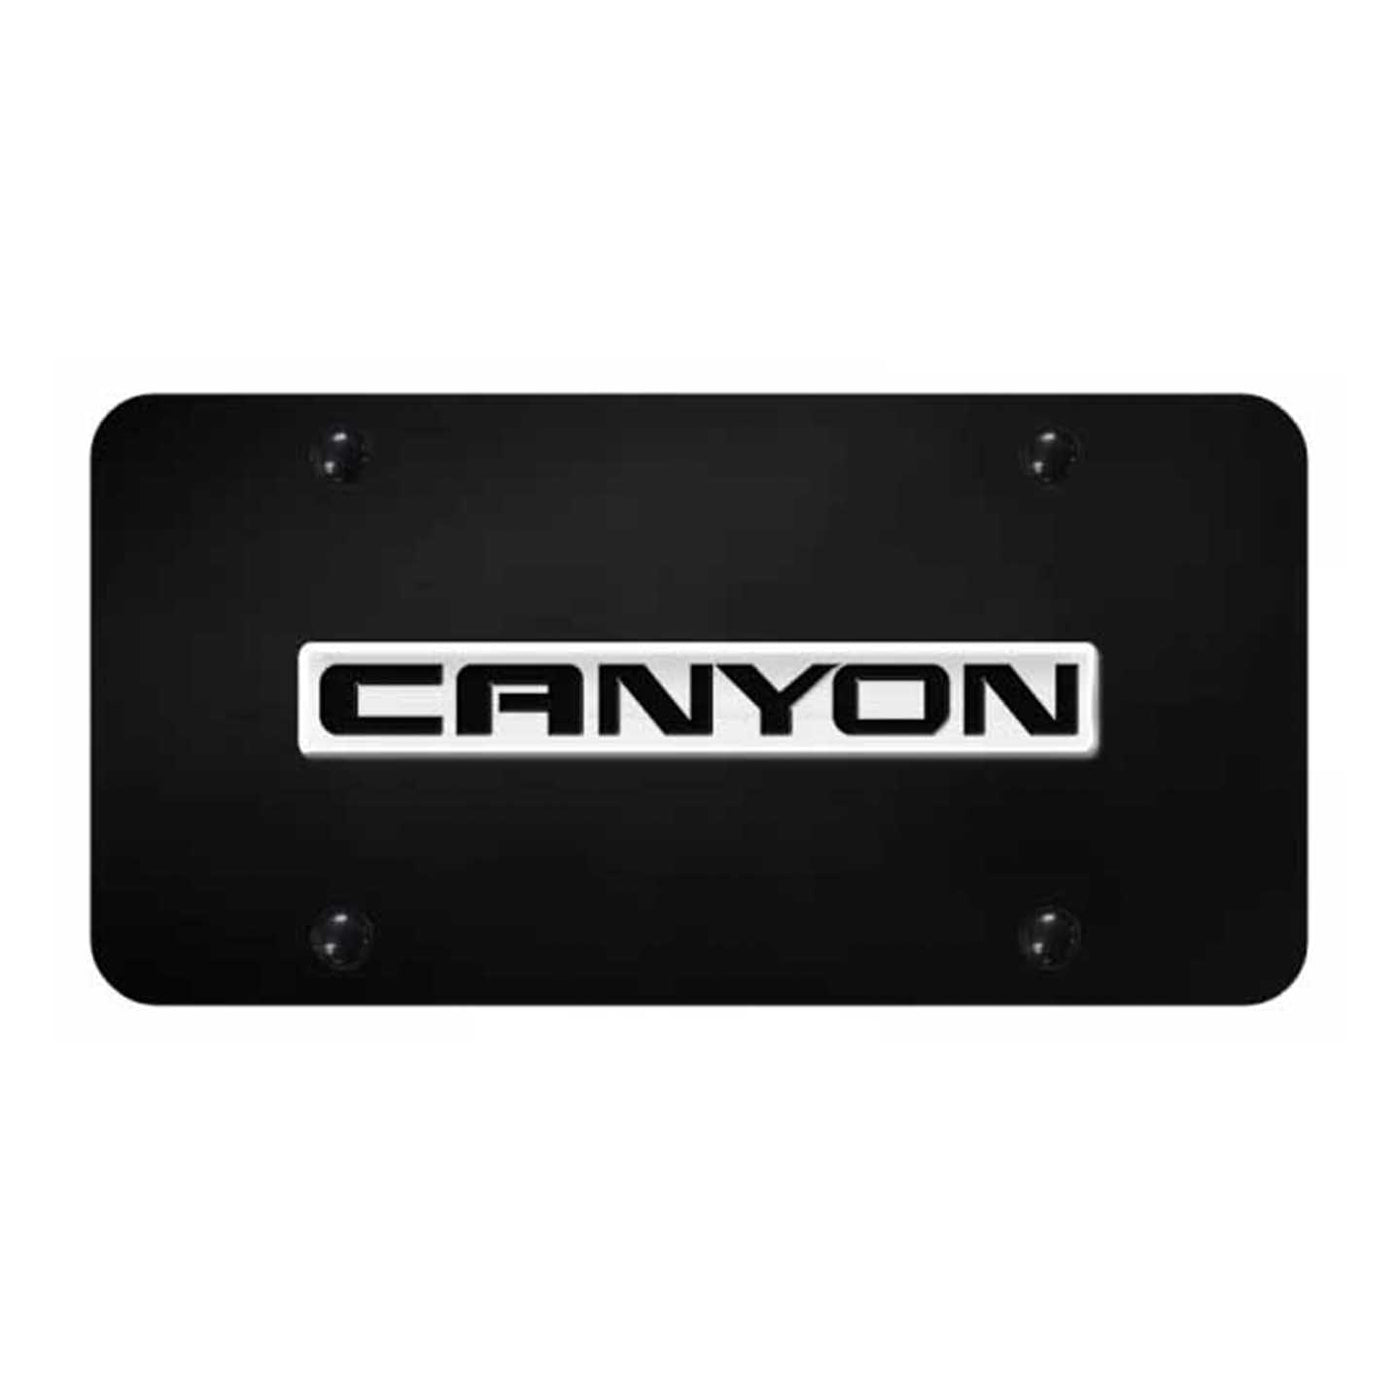 Canyon Name License Plate - Chrome on Black